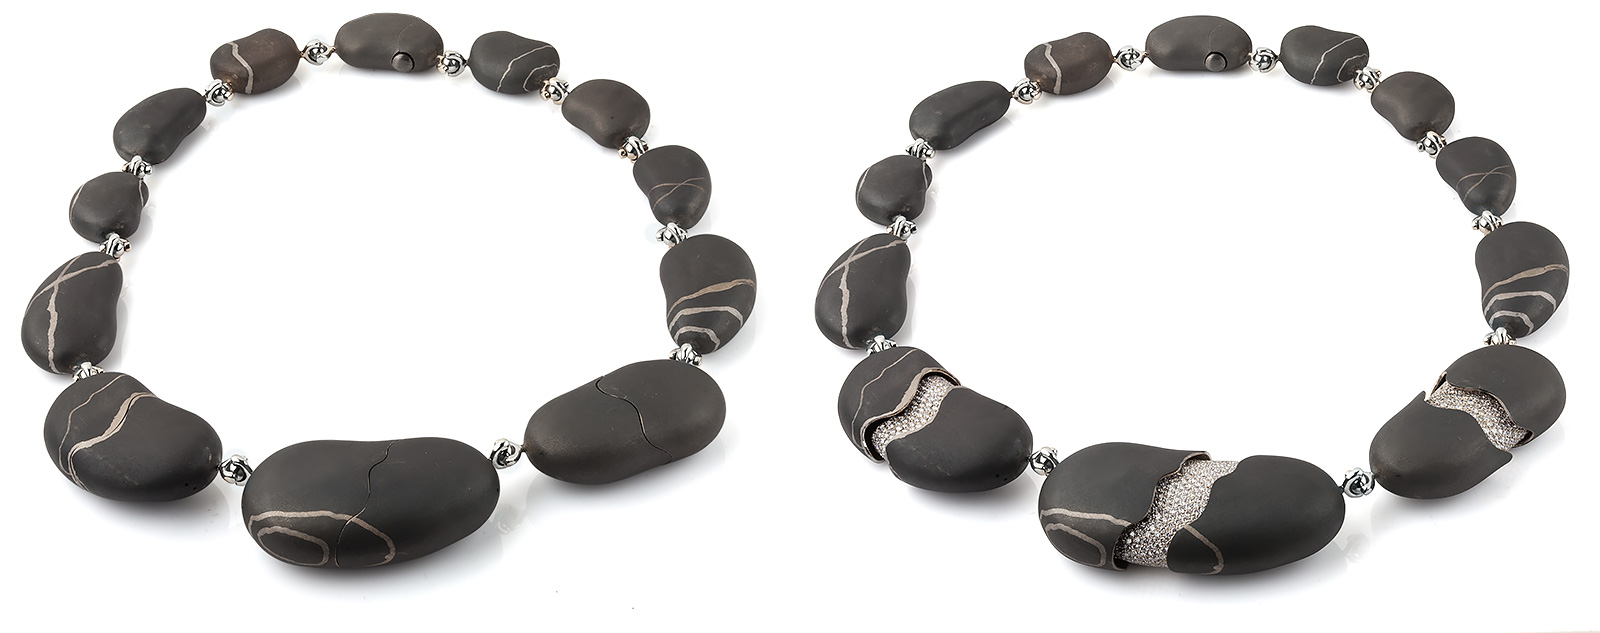 “Stones” necklace by Markin Jewellery